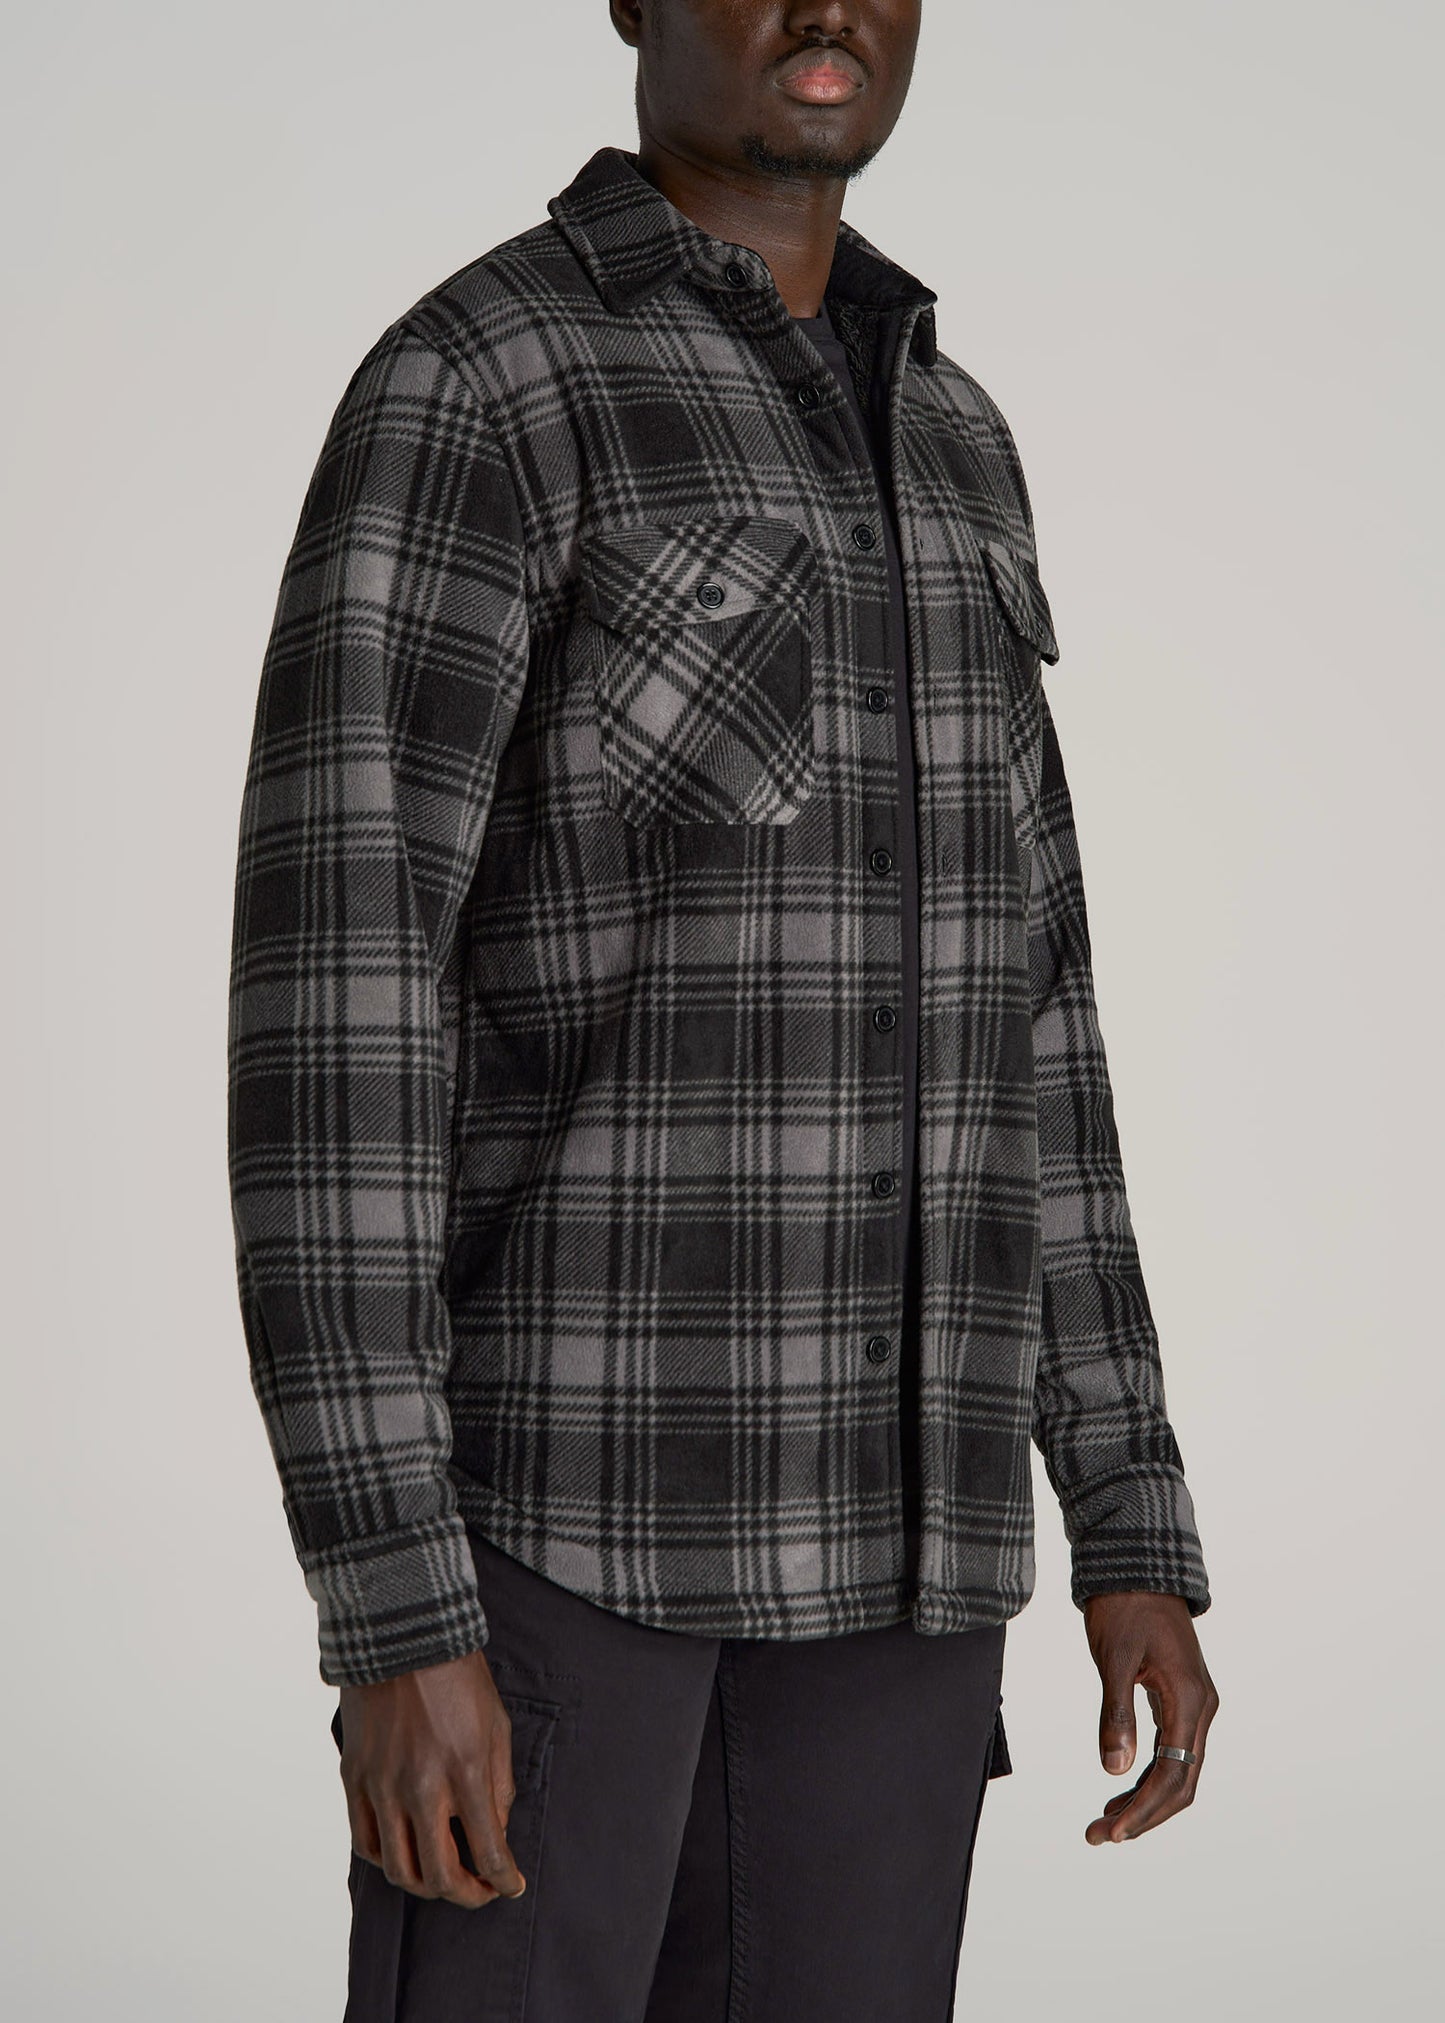 Sherpa-Lined Fleece Overshirt for Tall Men in Light Grey & Black Plaid